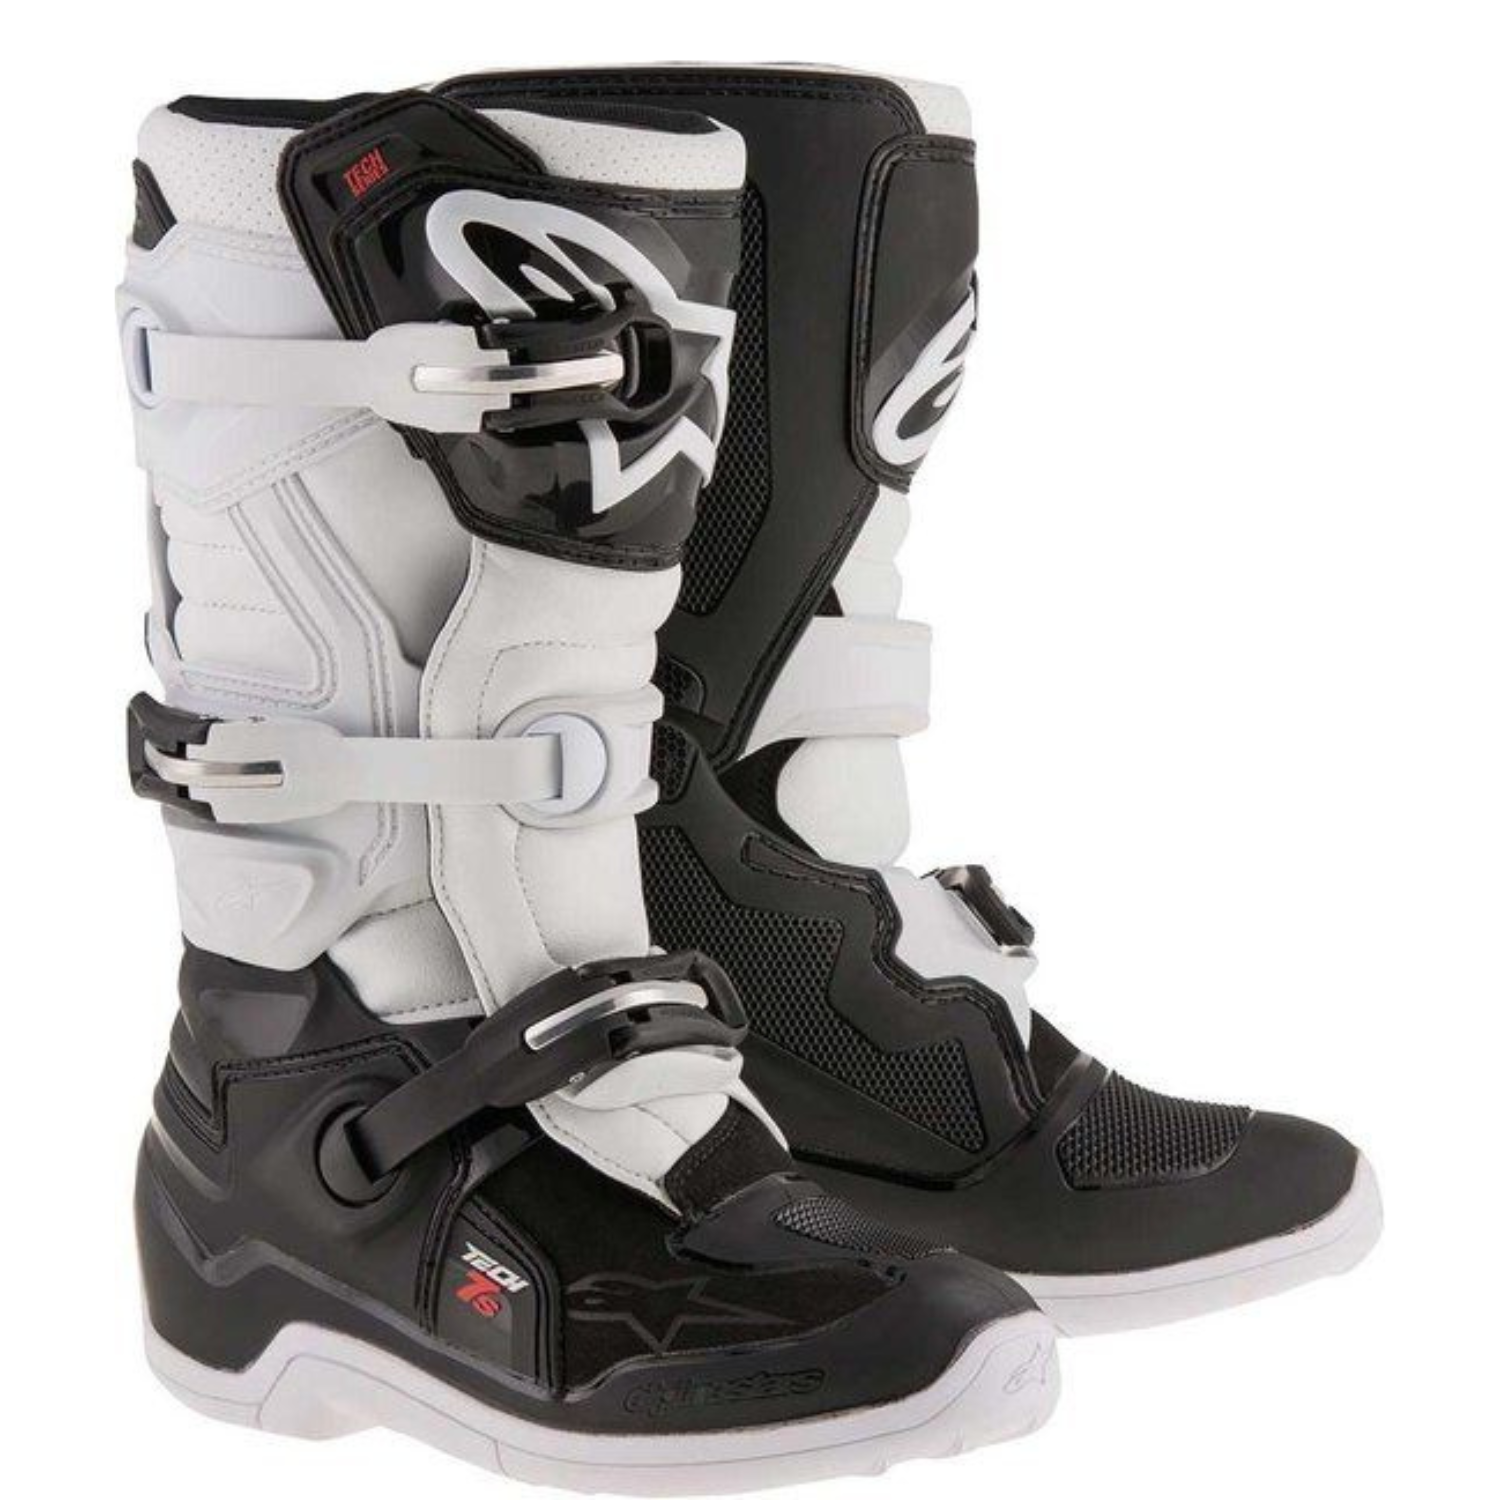 Image of Alpinestars Tech 7 S Black White Boots Size US 5 EN